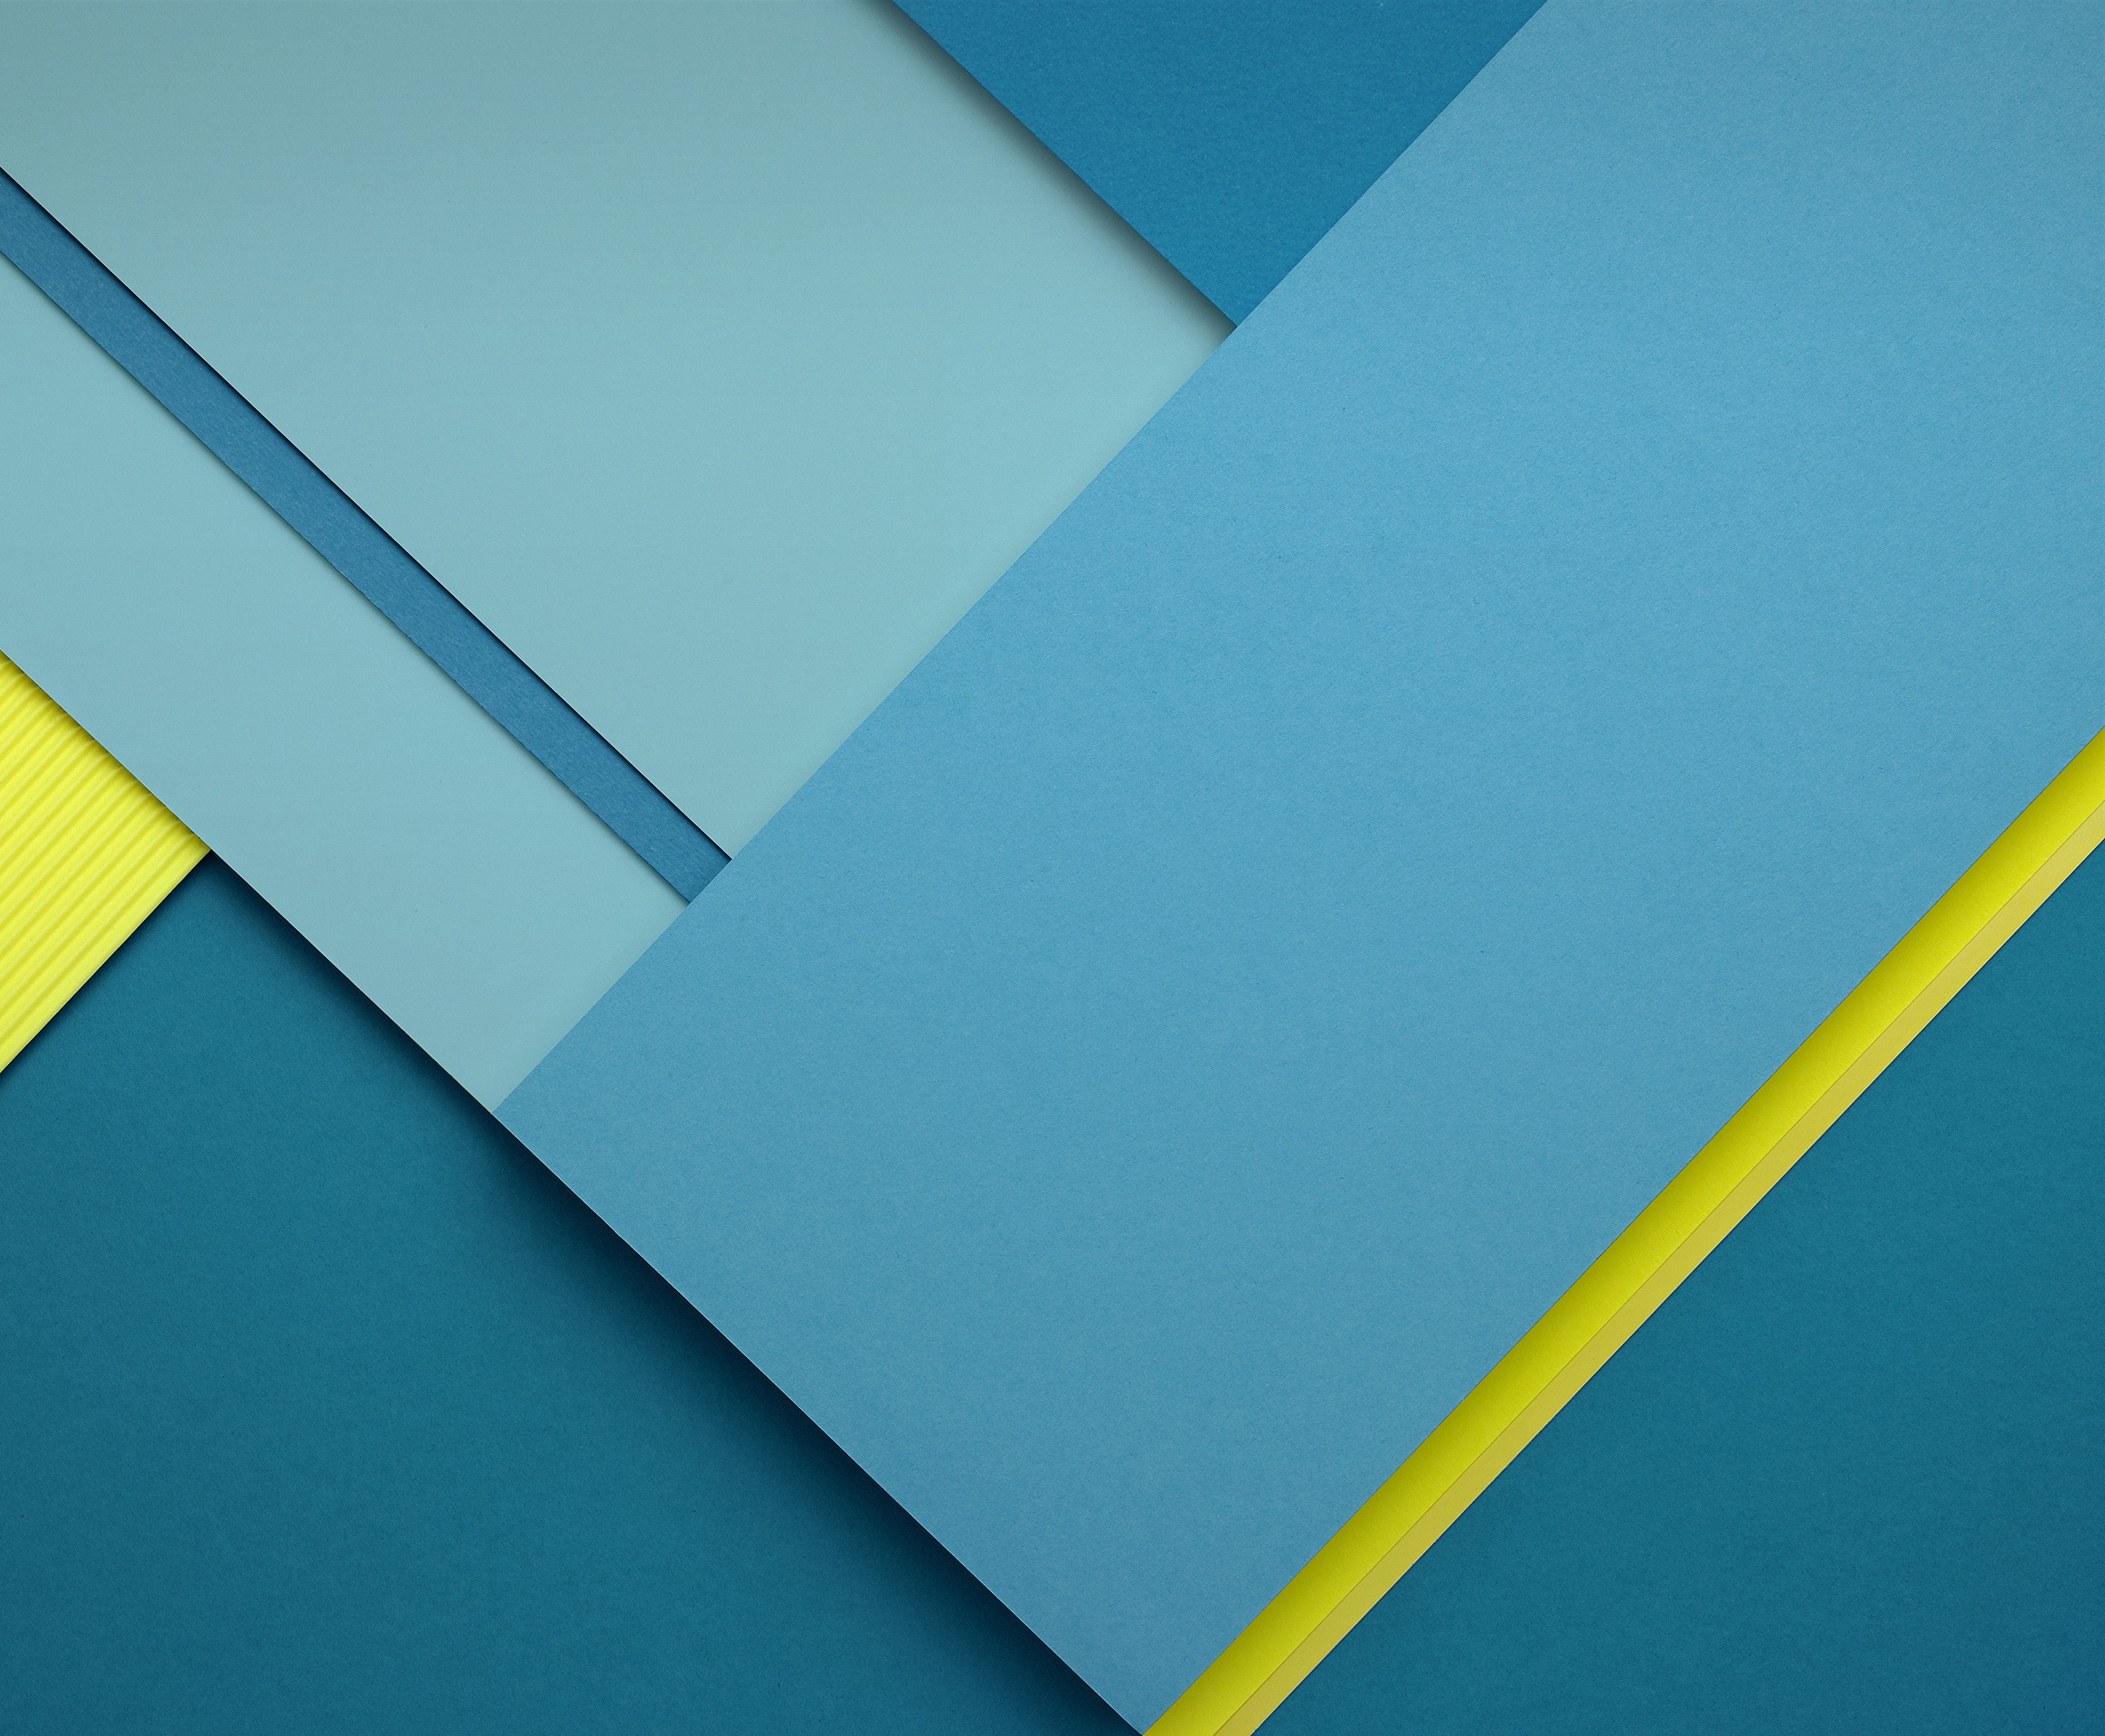 45 Nexus 7 Wallpaper Downloads On Wallpapersafari